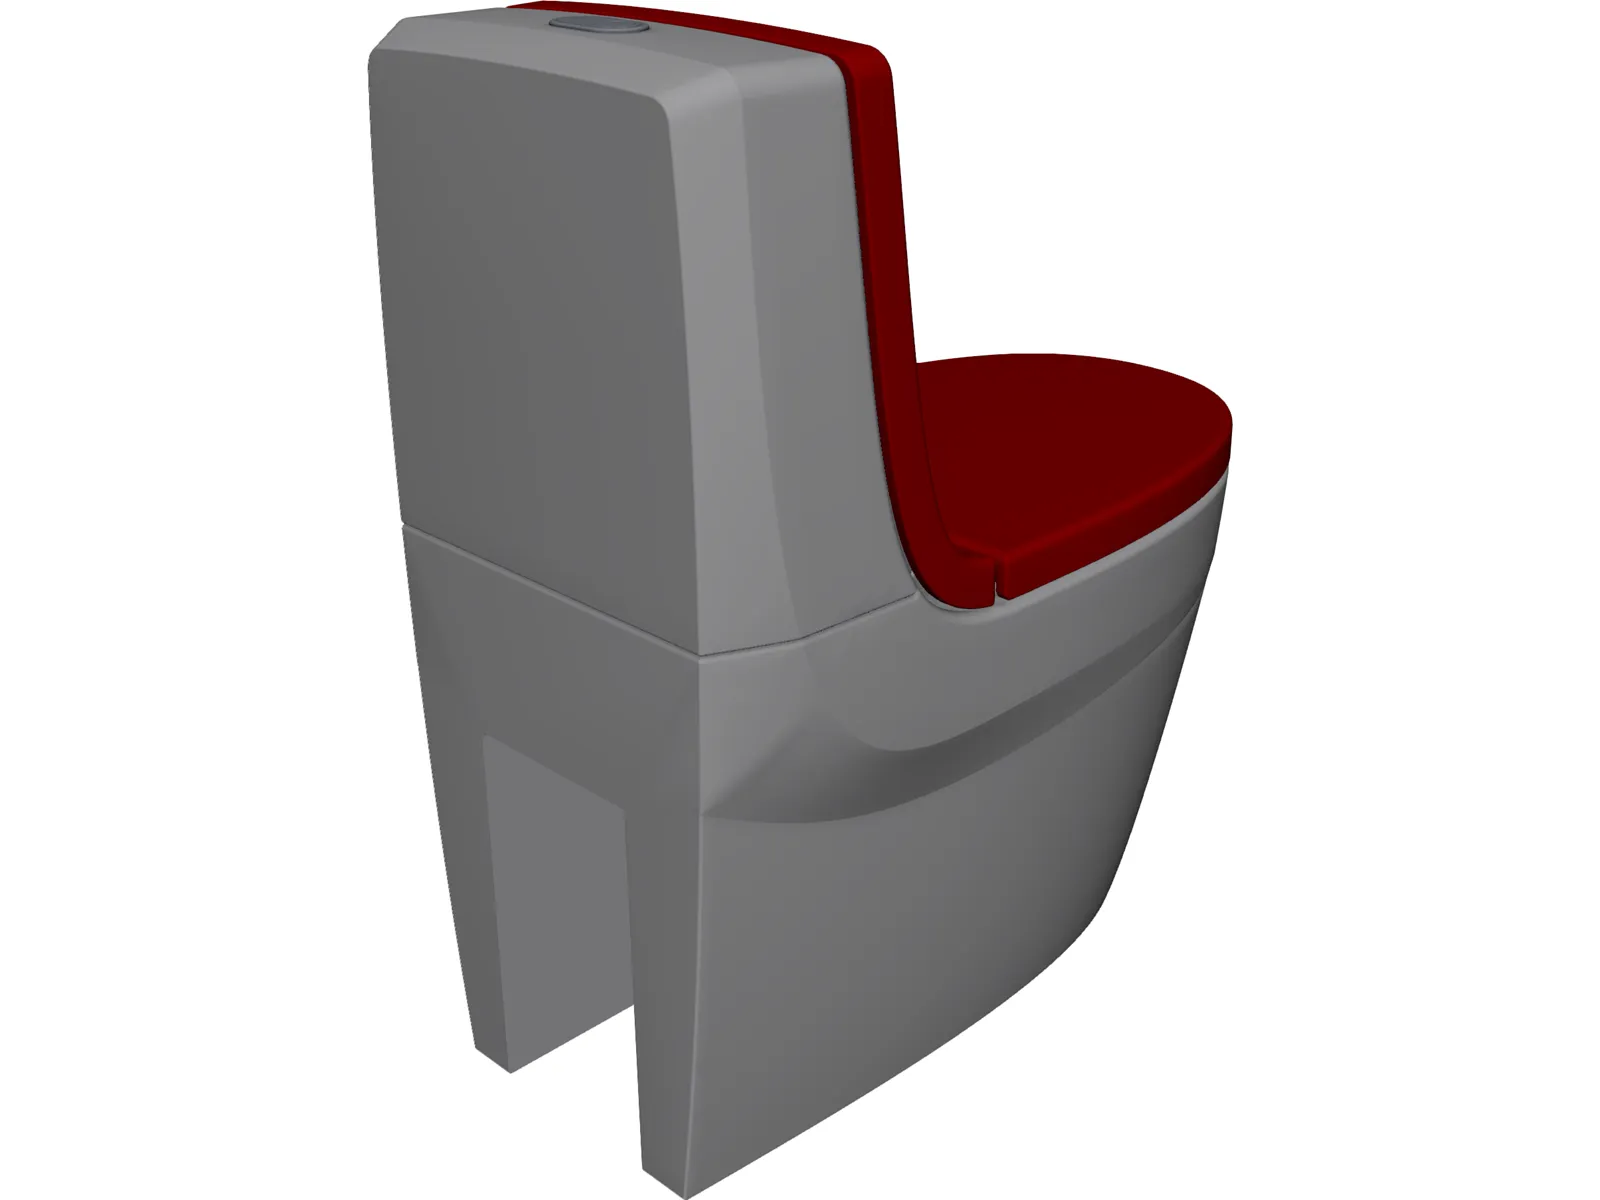 Roca Chroma Toilet 3D Model